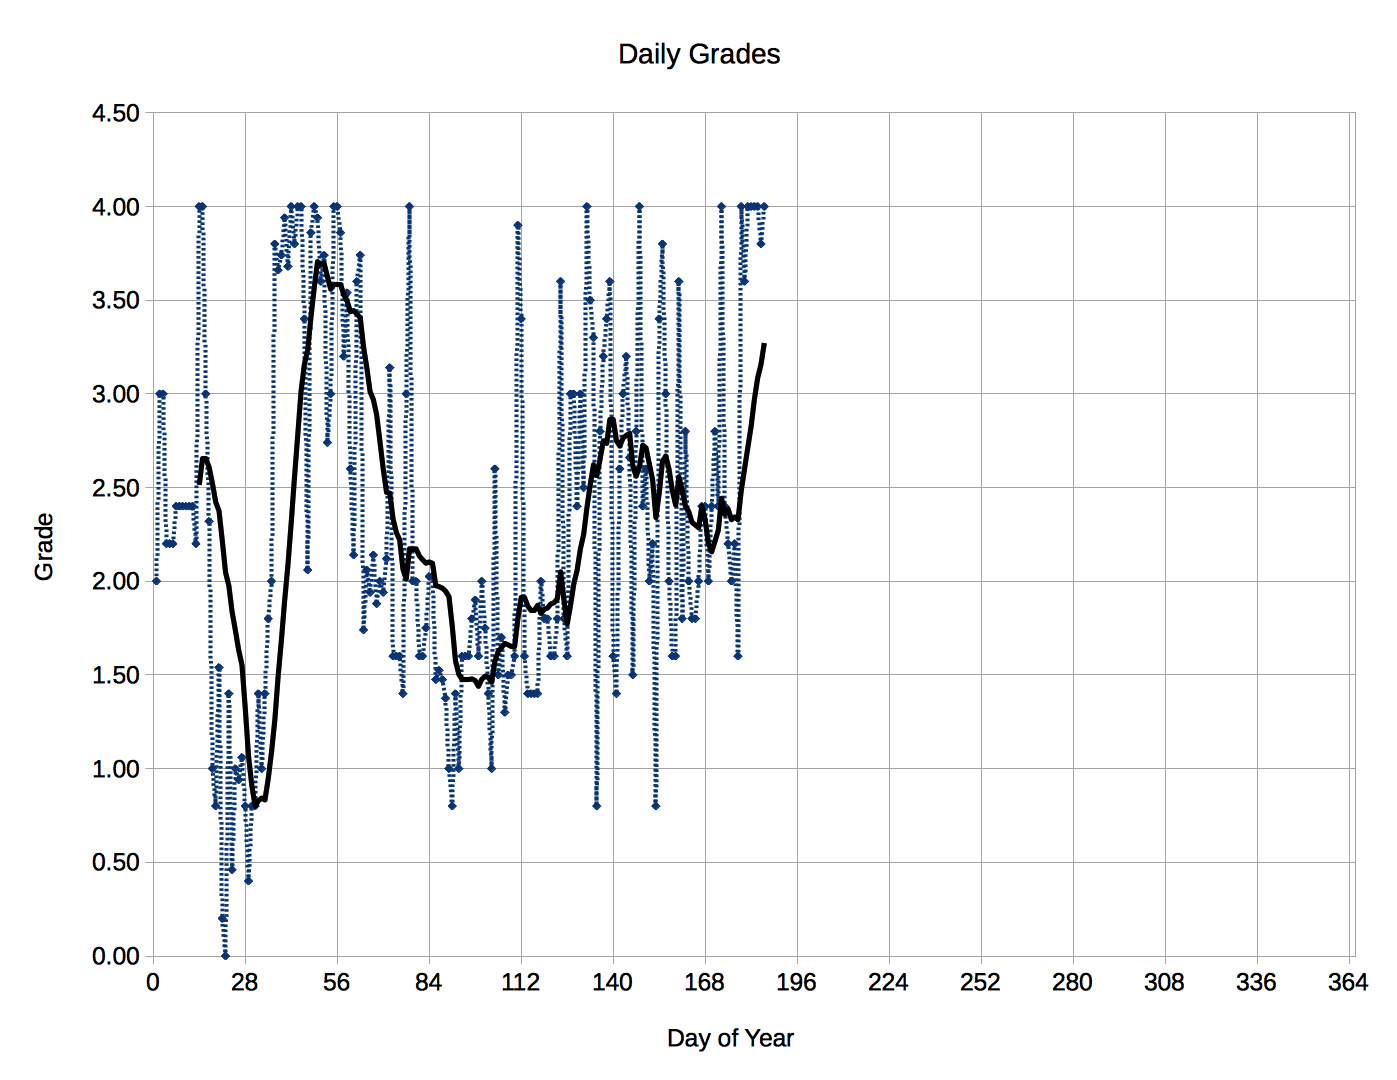 Daily grades chart